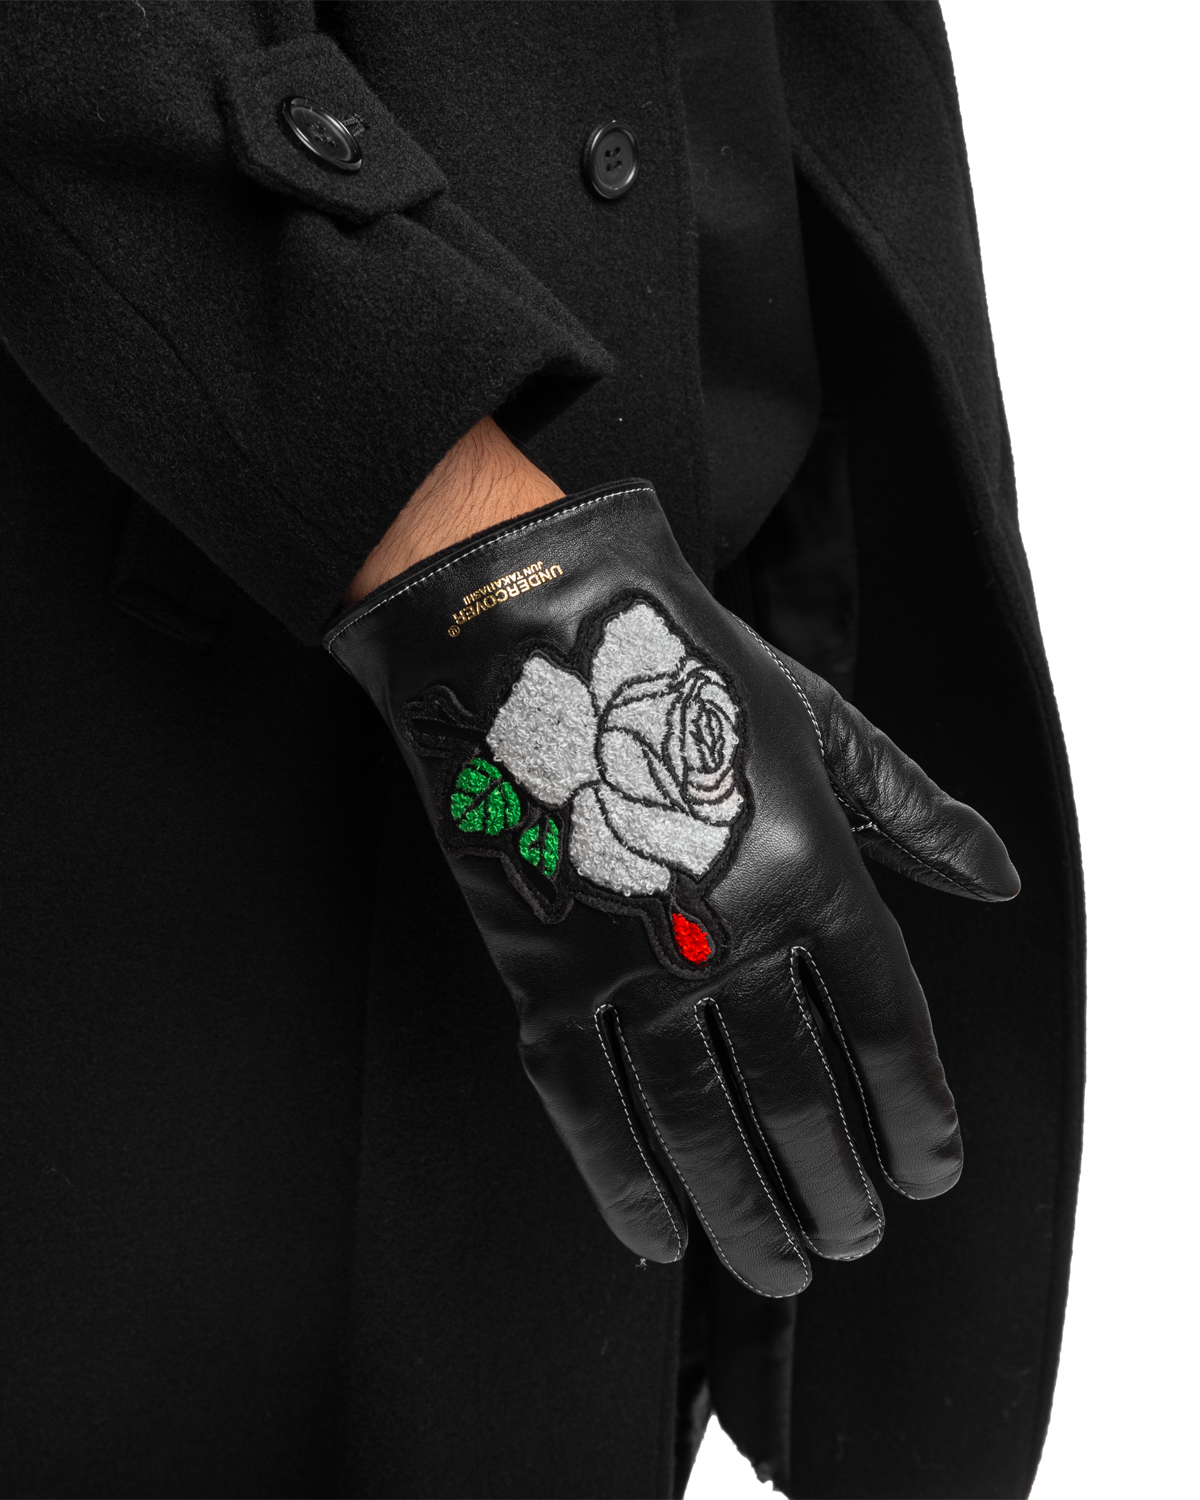 UC2C4G02-2 Rose Leather Gloves Black